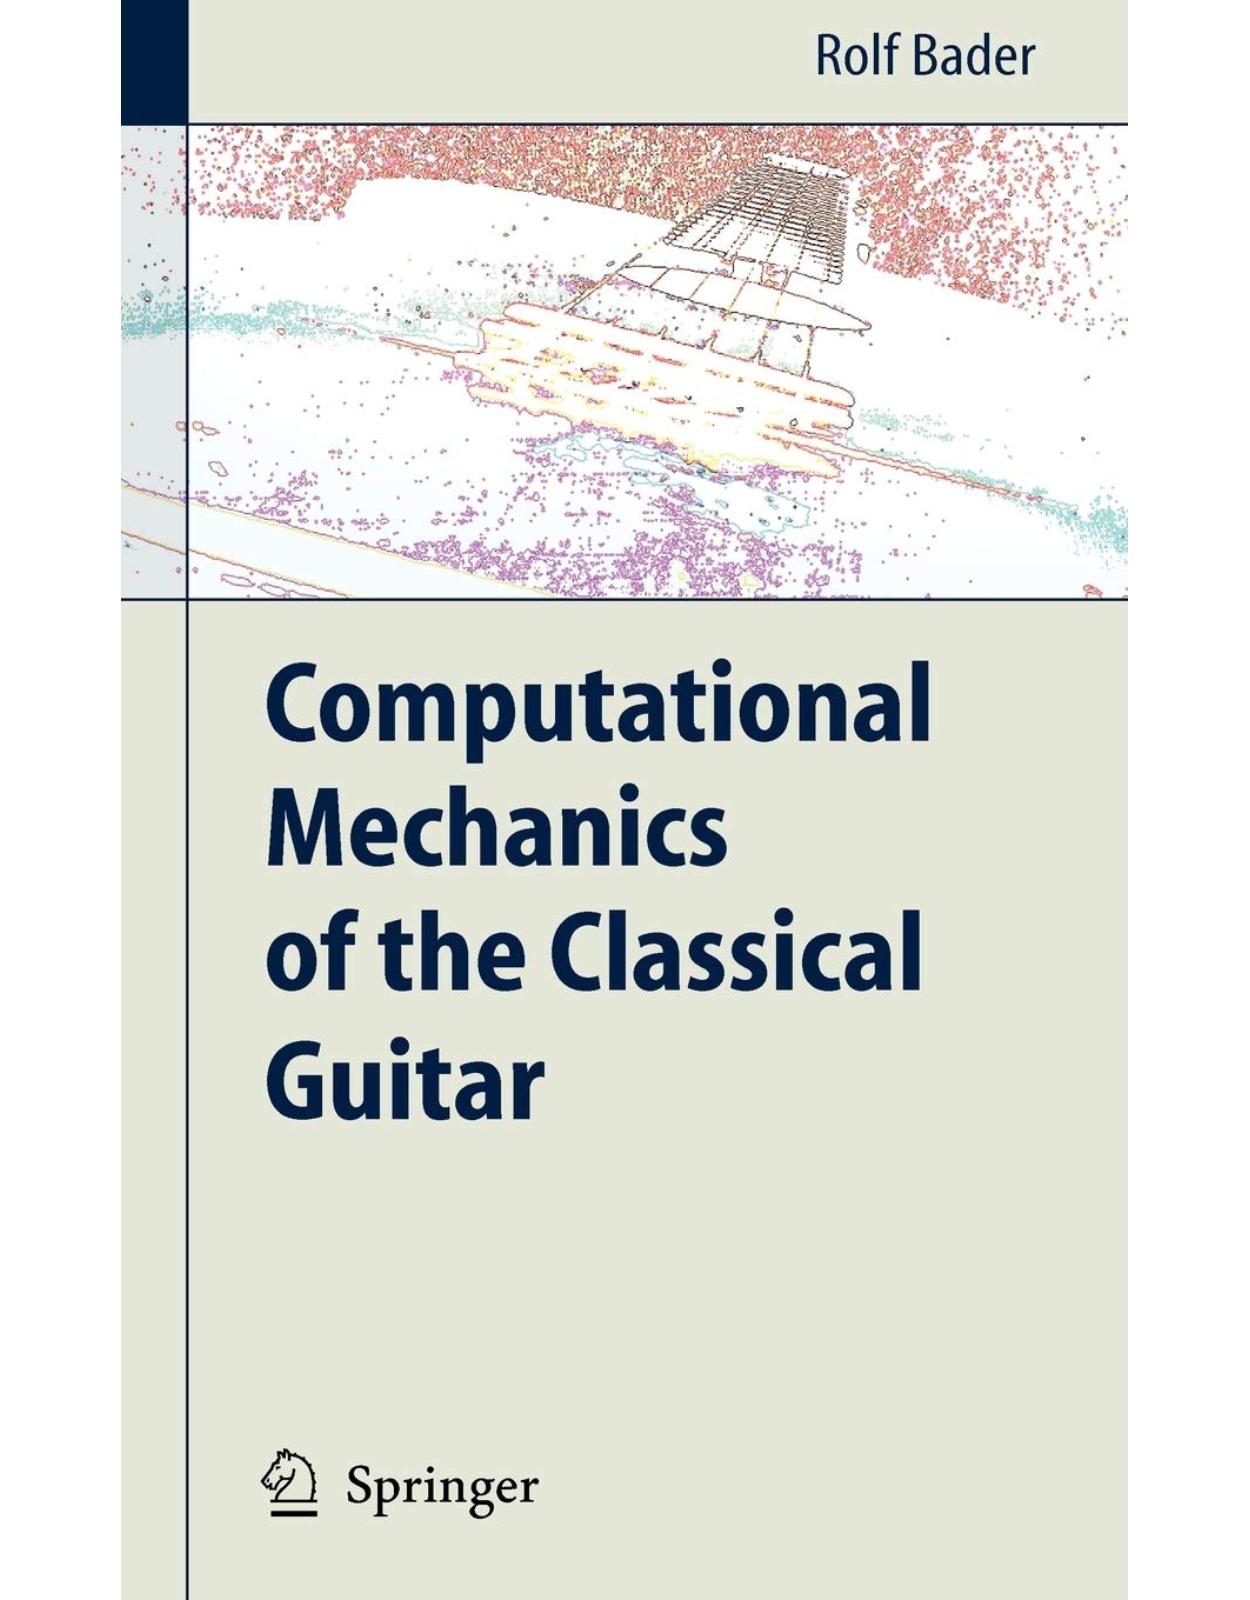 Computational Mechanics of the Classical Guitar